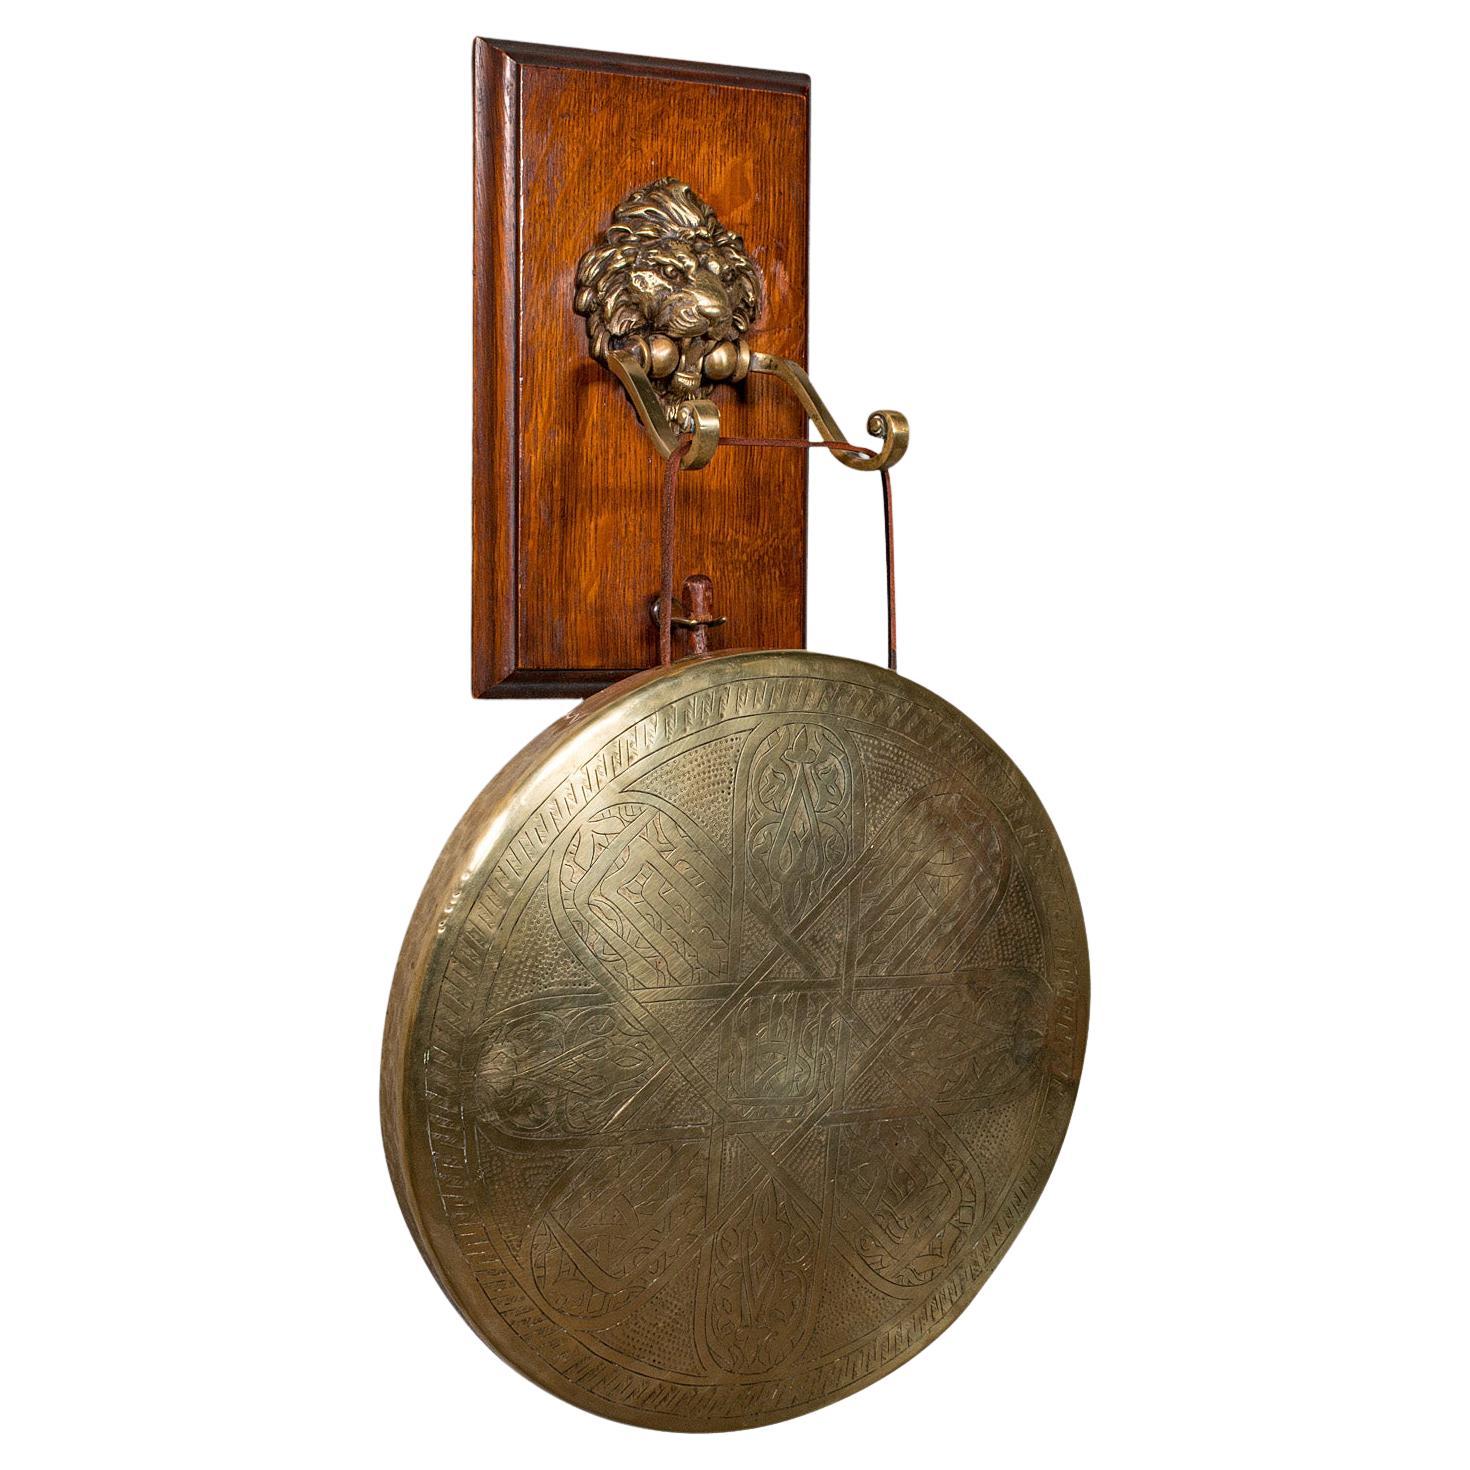 Antique Hanging Dinner Gong, English, Brass, Oak, Decorative, Victorian, C.1880